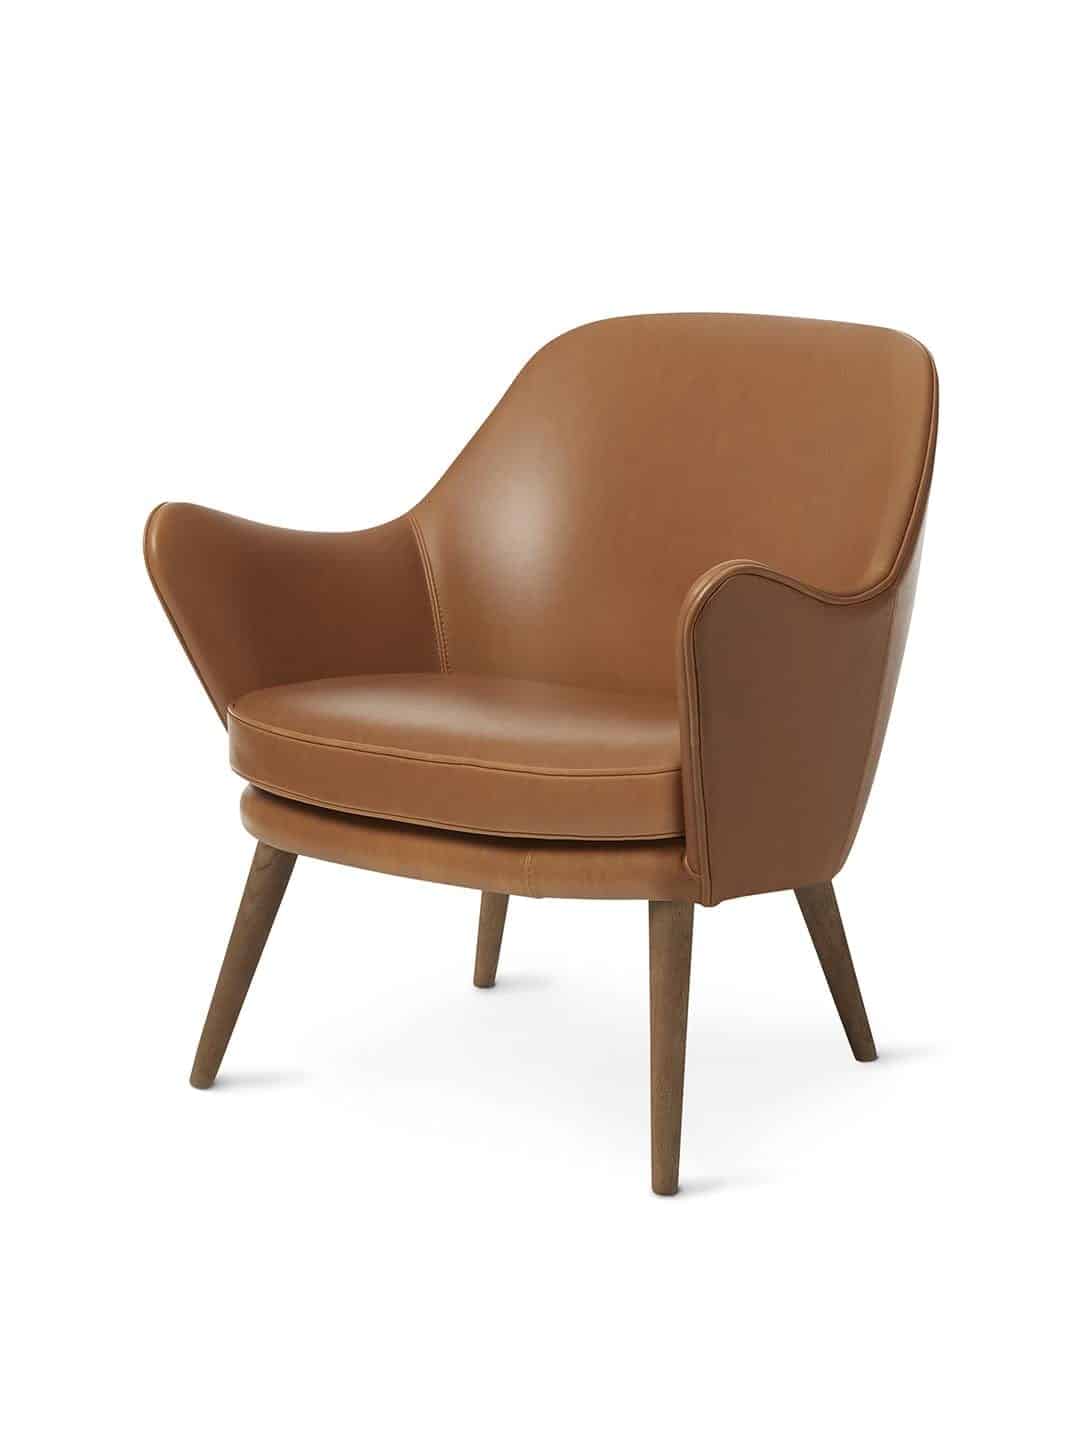 Кресло для отдыха Warm Nordic Dwell желто-коричневая кожа на белом фоне вид сбоку